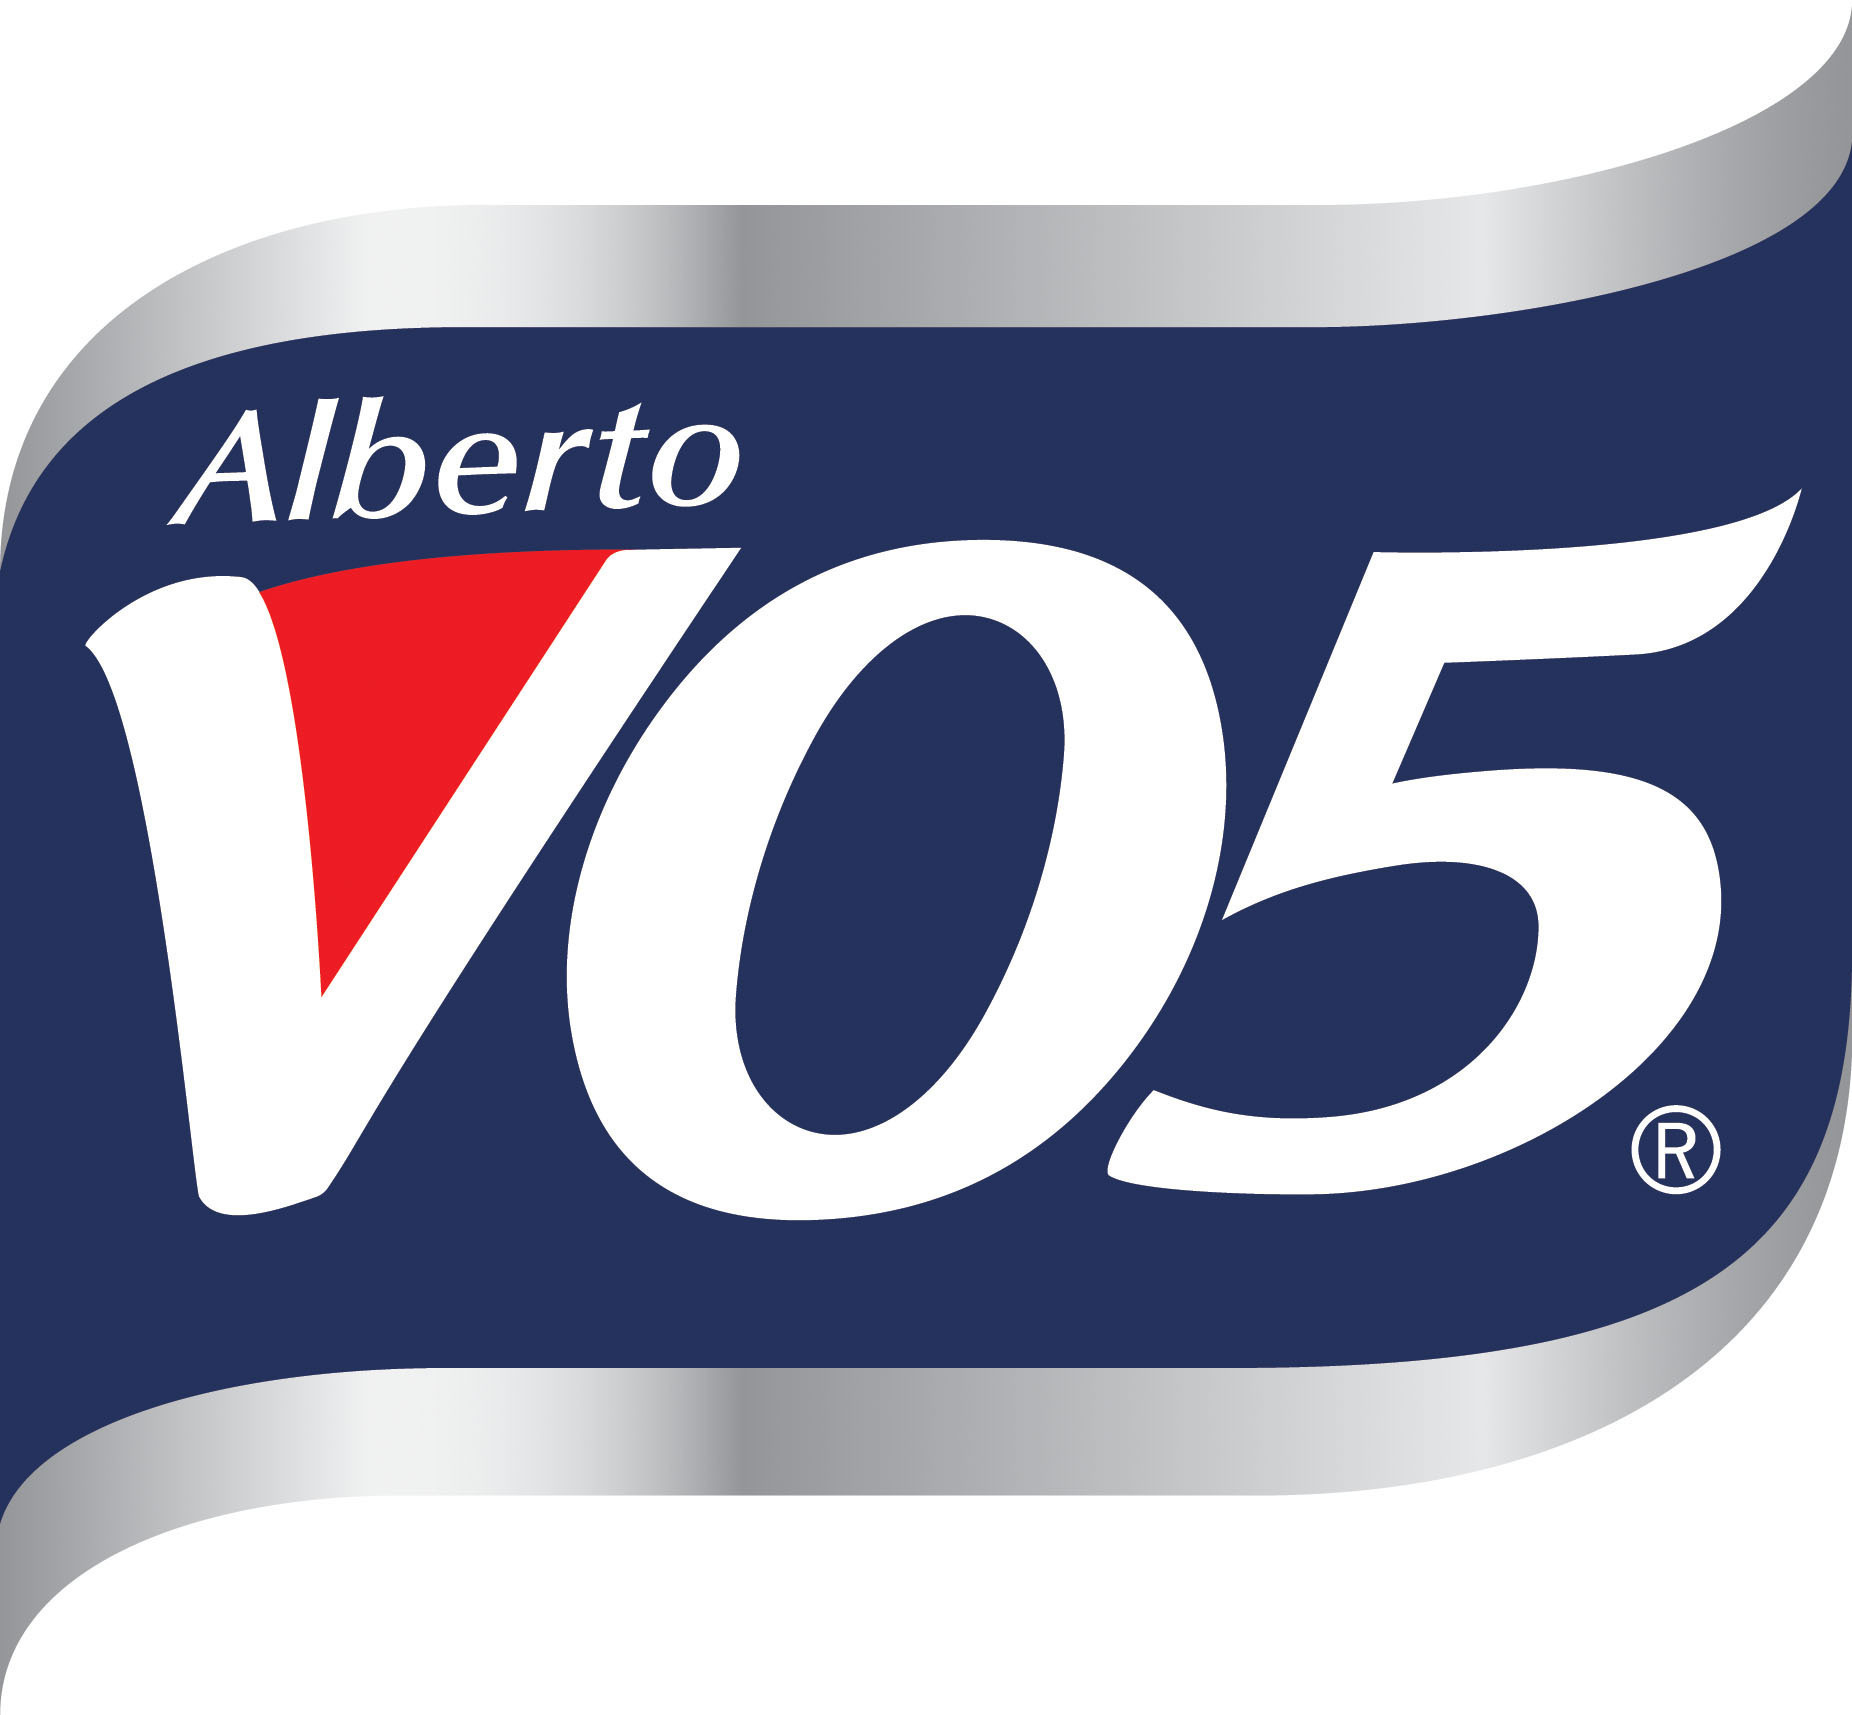 Alberto Vo5 Logo photo - 1